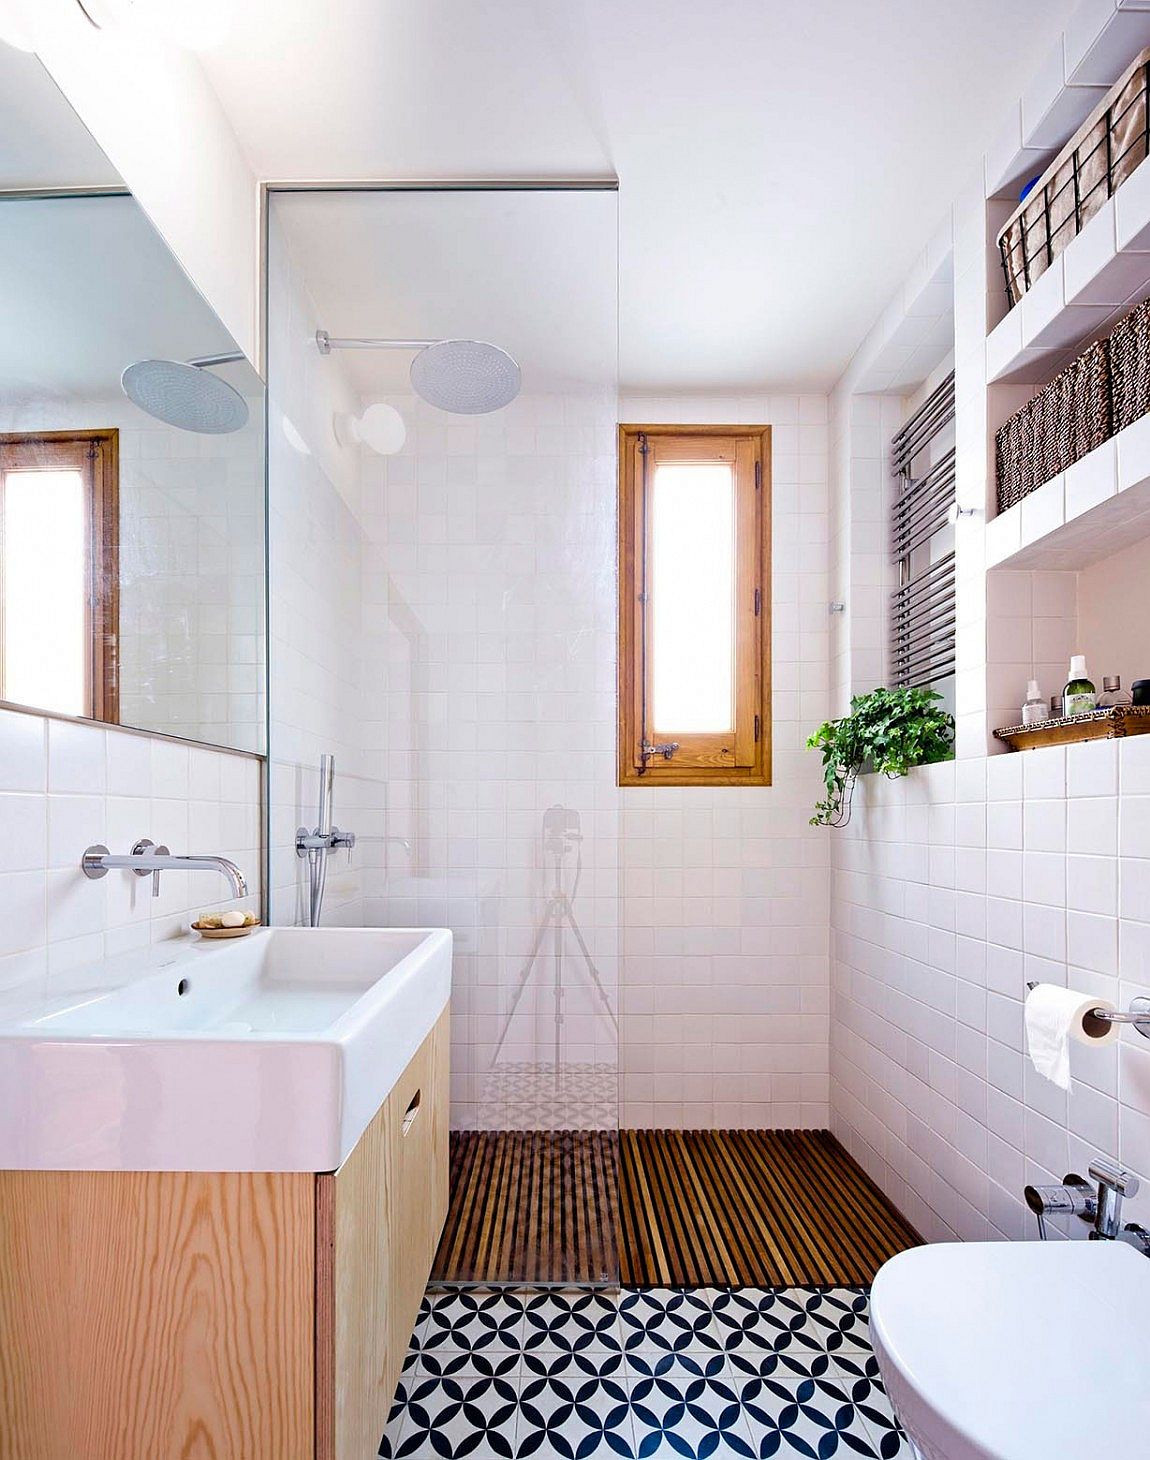 Apartment Bathroom Decor
 25 Tiny Apartment Bathroom Ideas that Maximize Space and